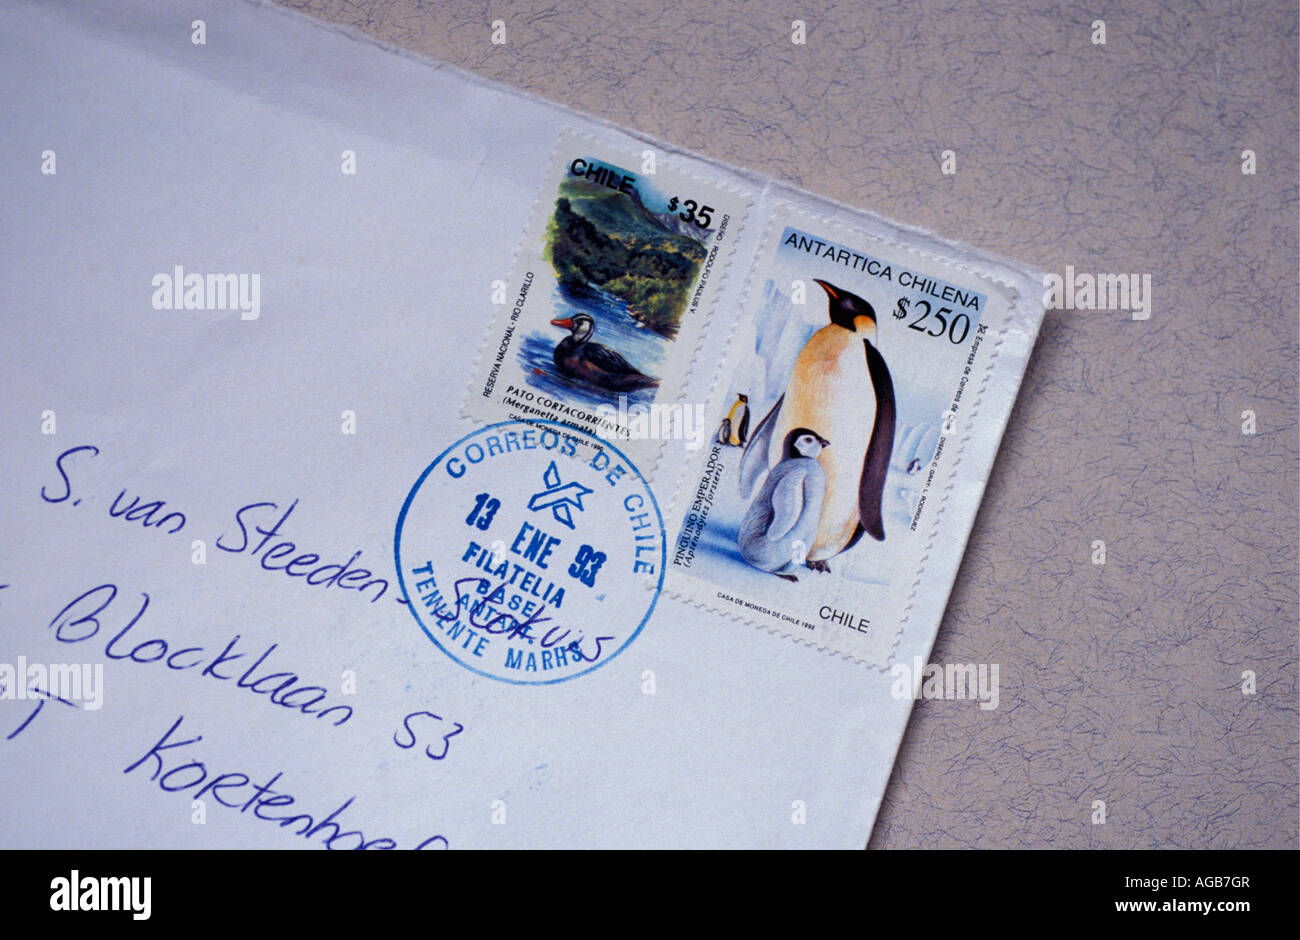 Antarctica Chilean stamps on envelope Stock Photo